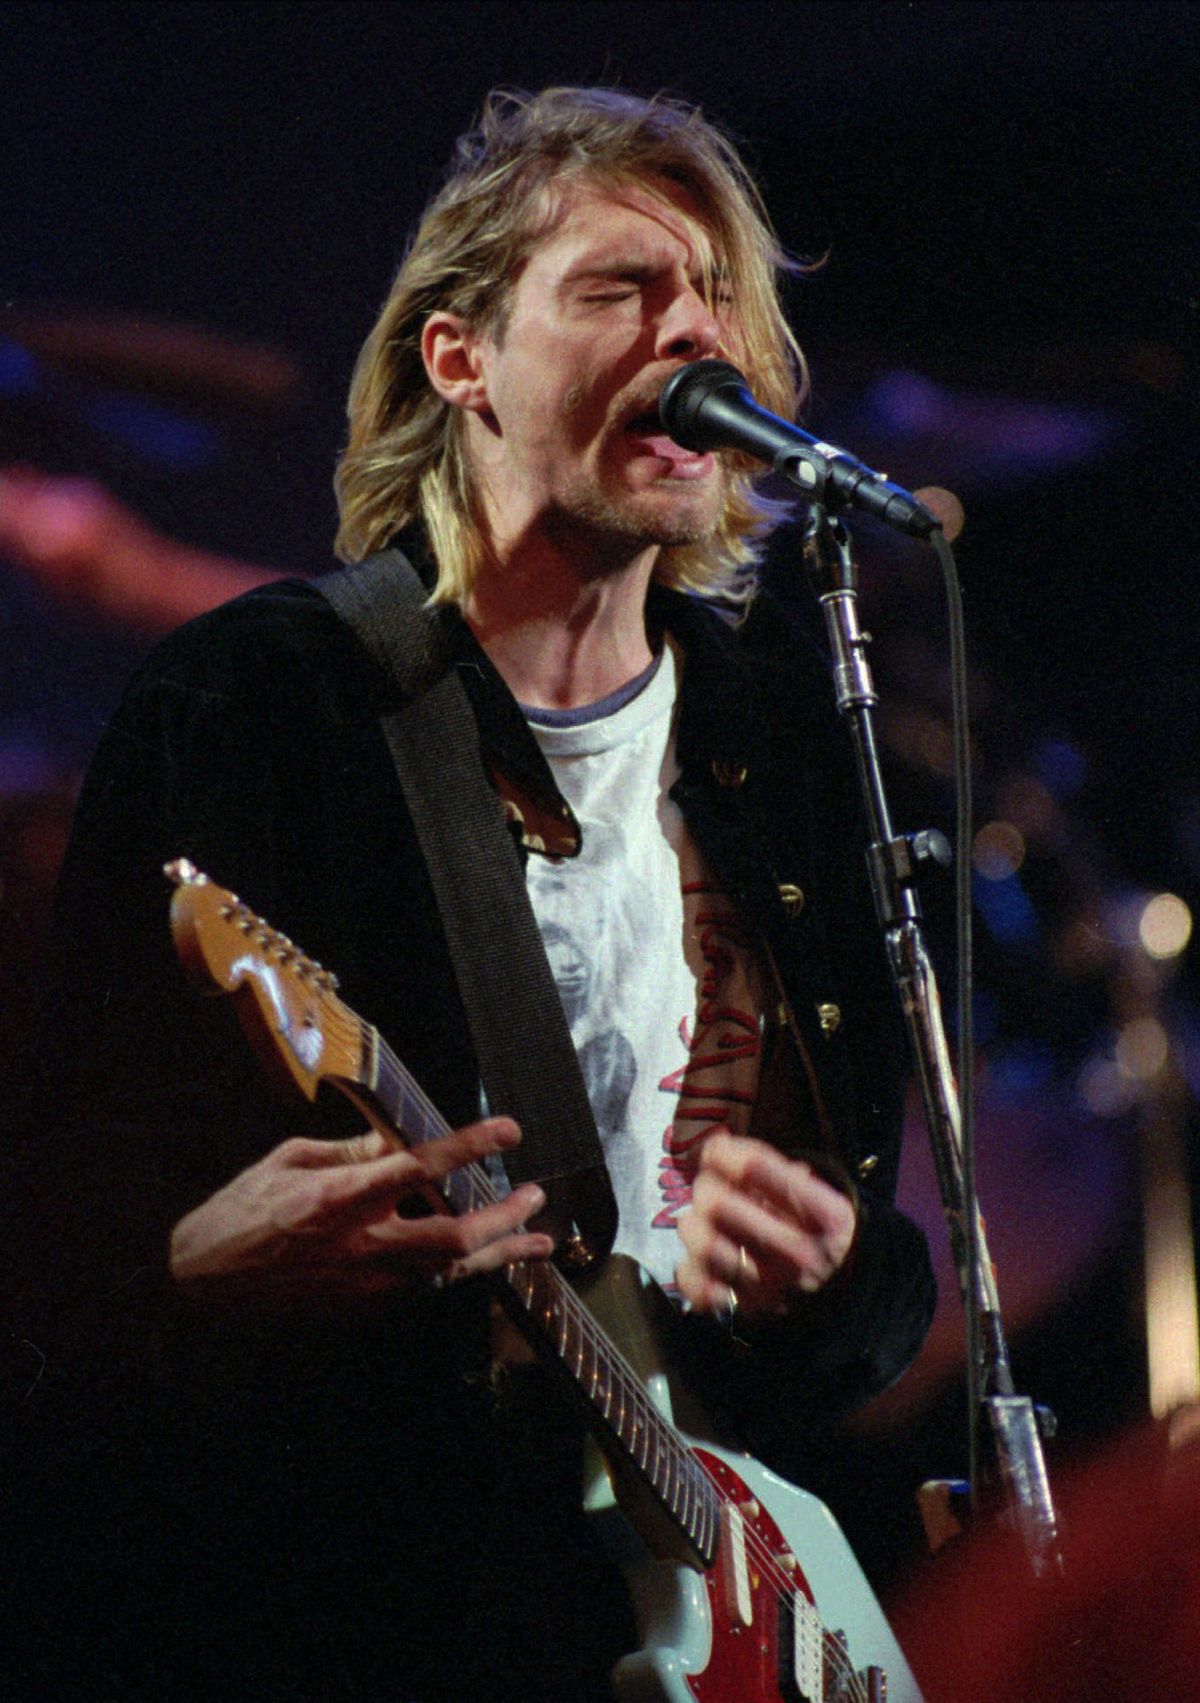 Kurt Cobain, lead singer of Nirvana, is shown performing in Seattle on Dec. 13, 1993. (Associated Press)